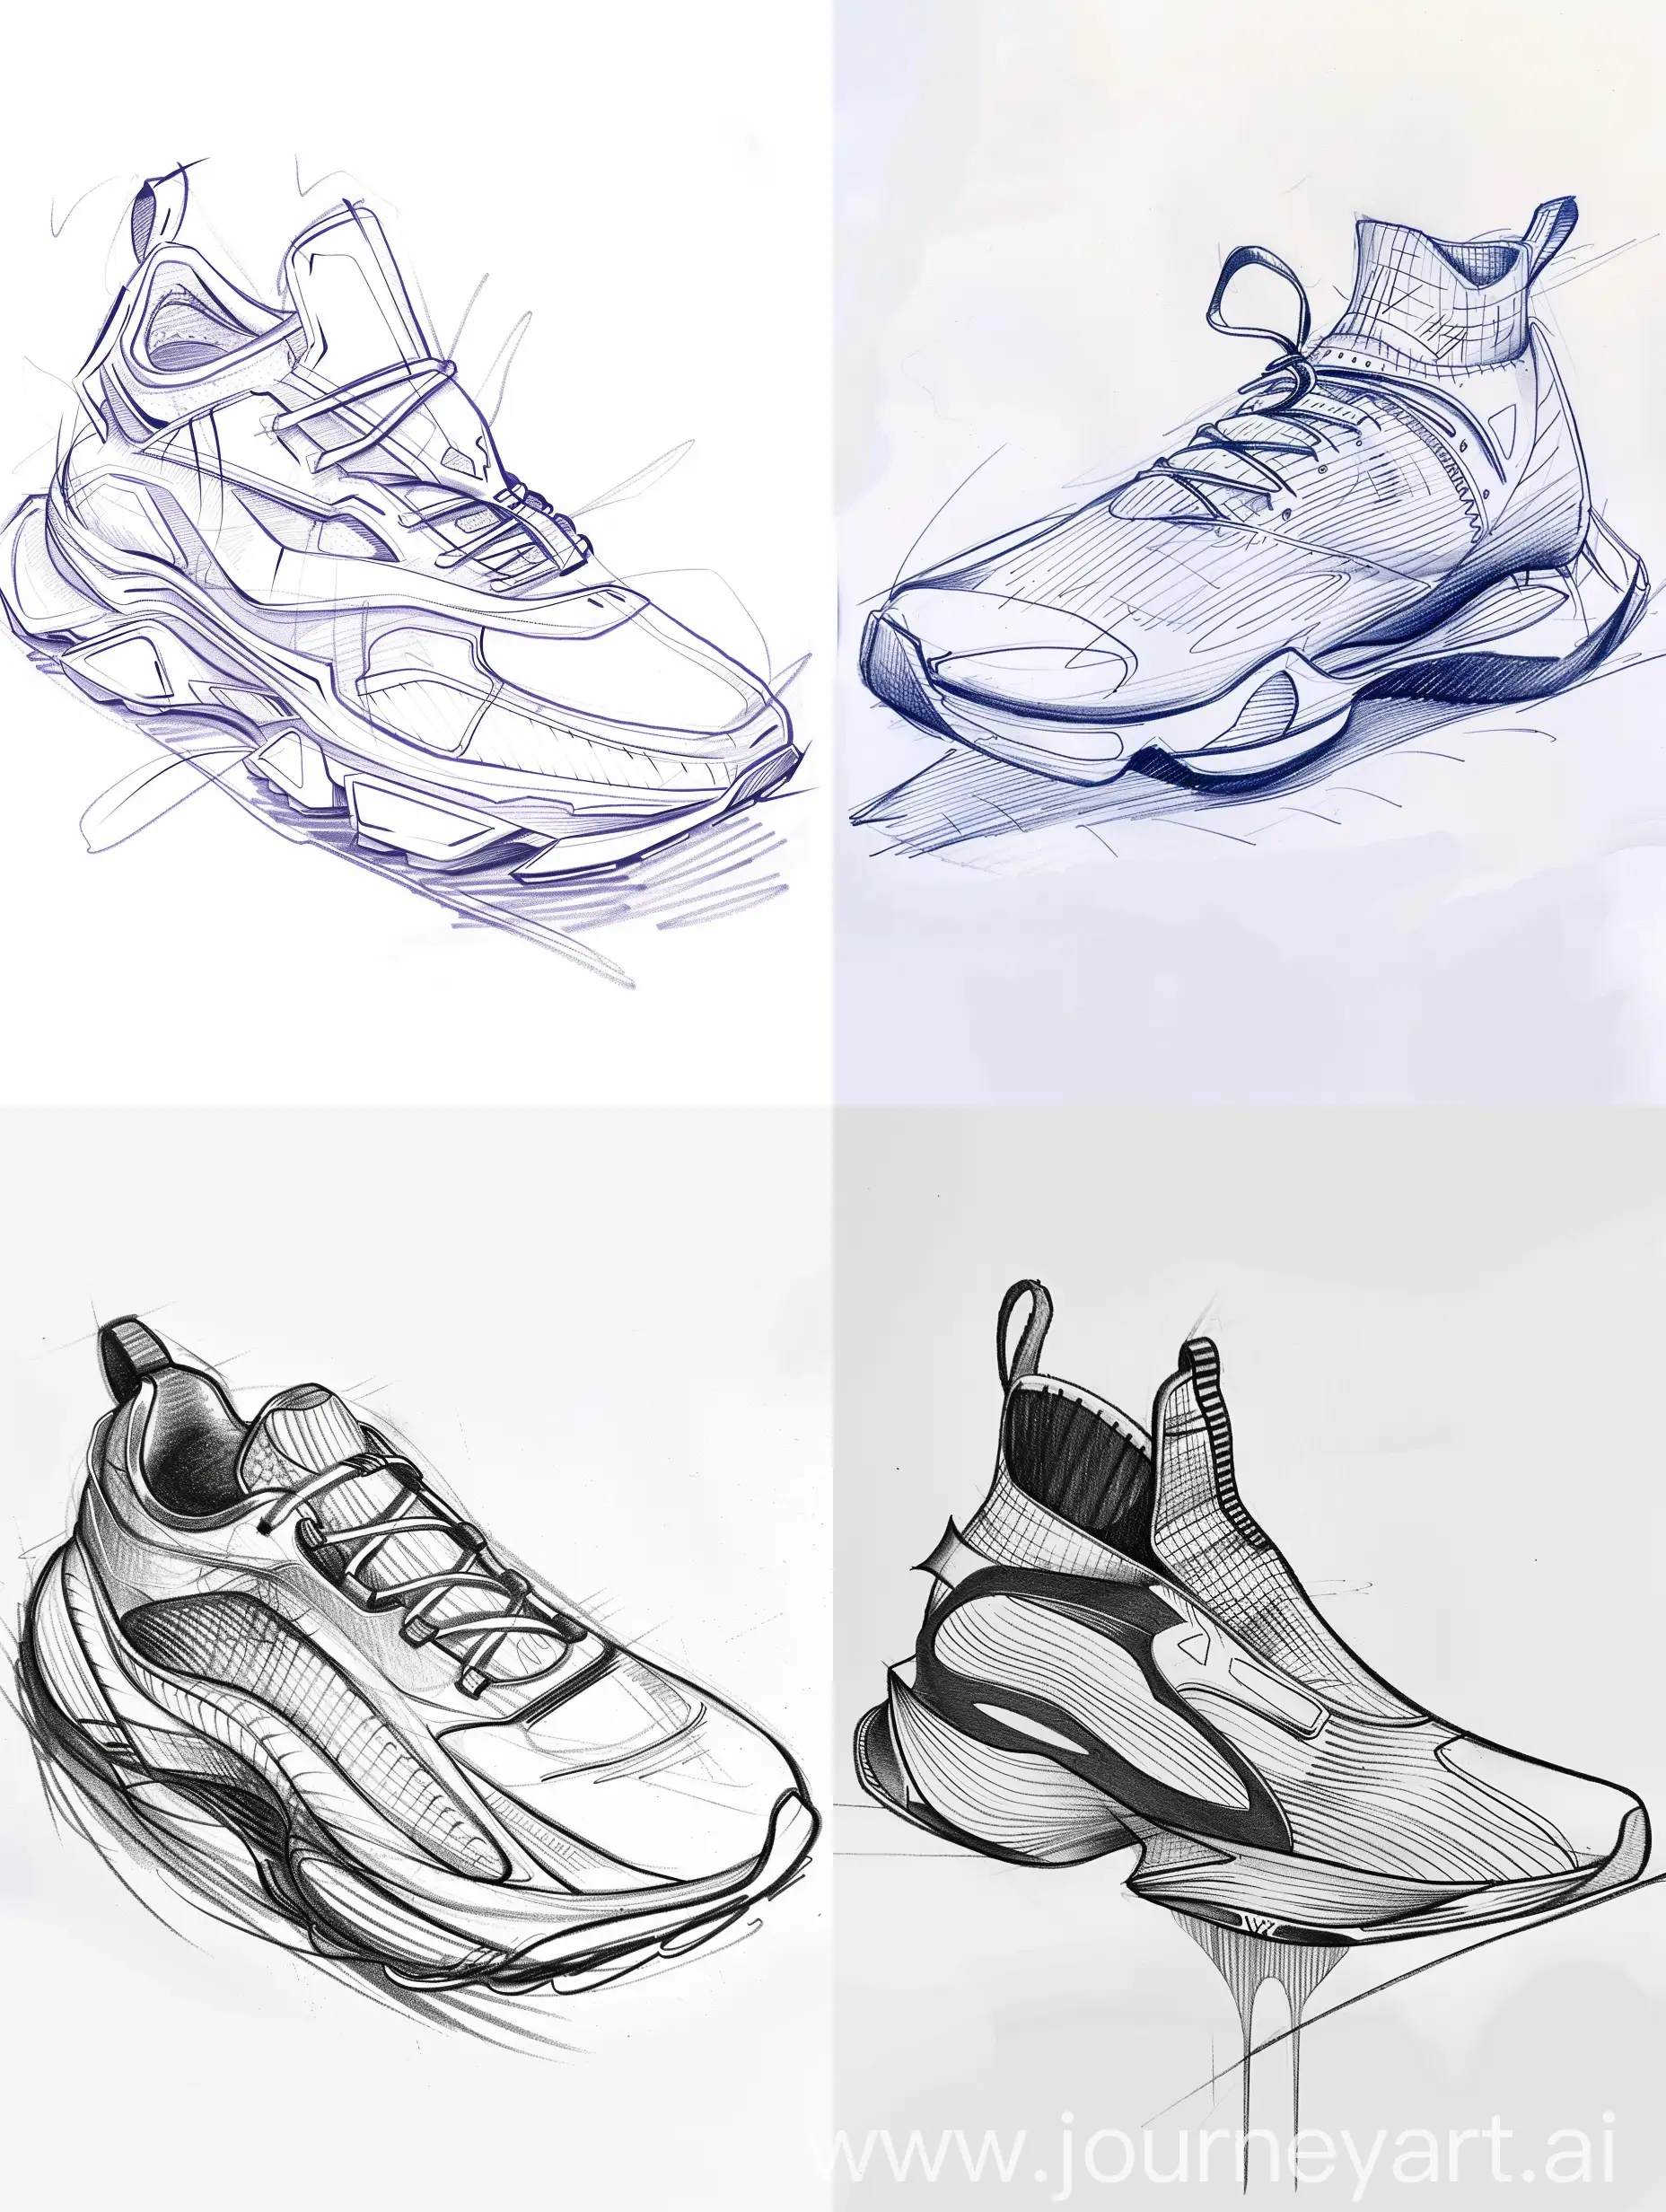 Minimalist-Futuristic-Shoes-Sketch-Design-on-White-Background